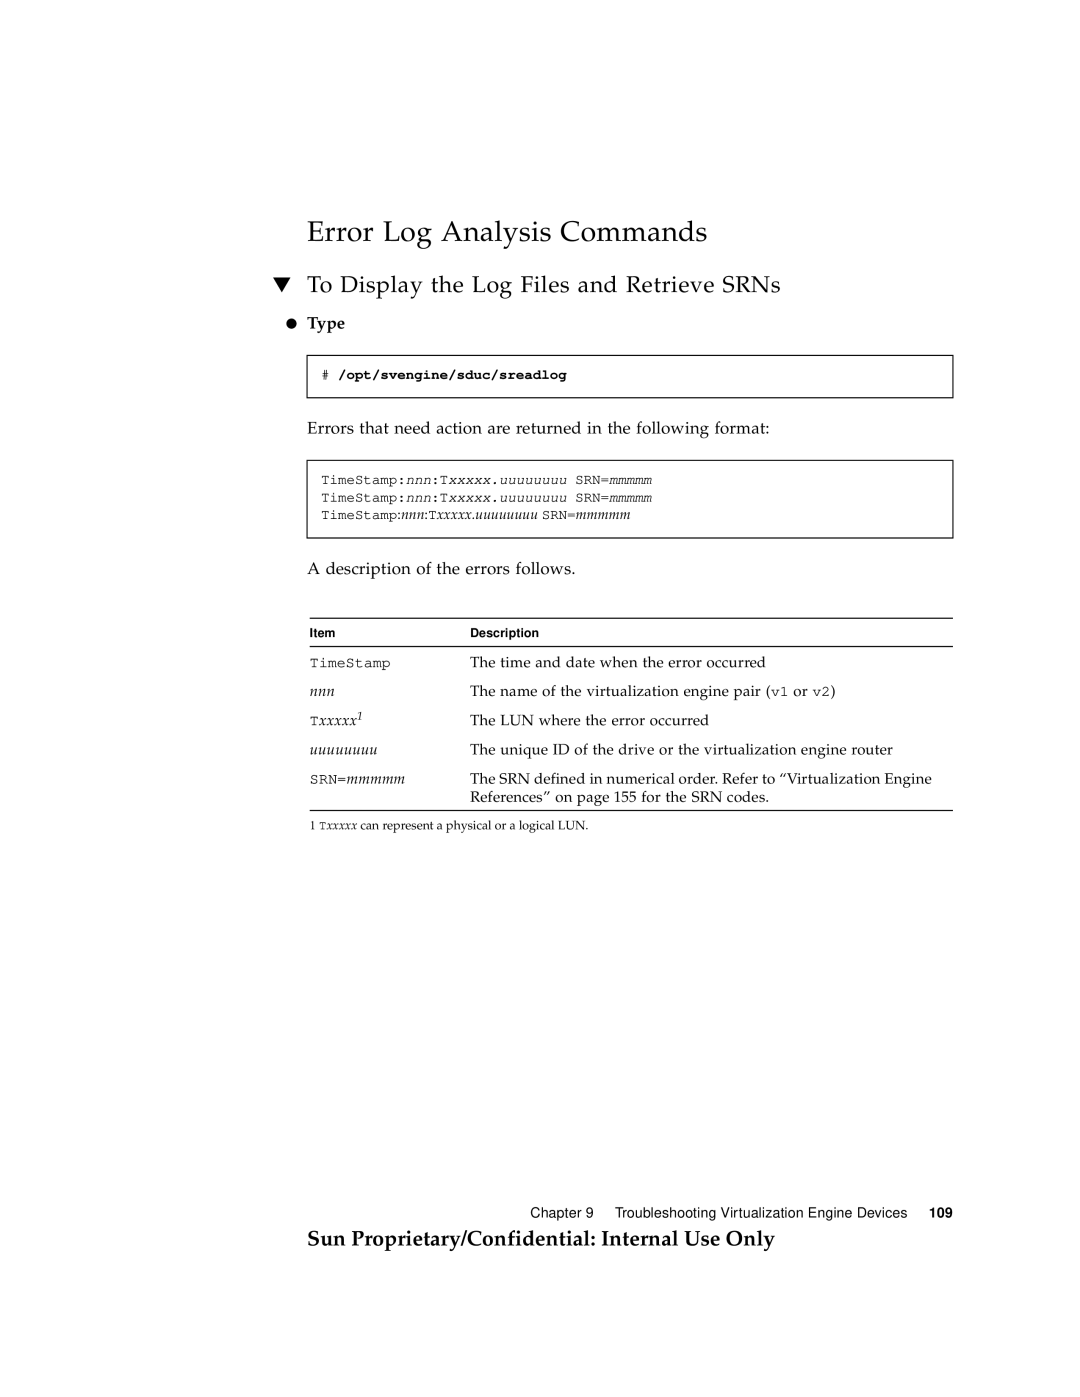 Sun Microsystems 6900, 3900 manual Error Log Analysis Commands, To Display the Log Files and Retrieve SRNs 